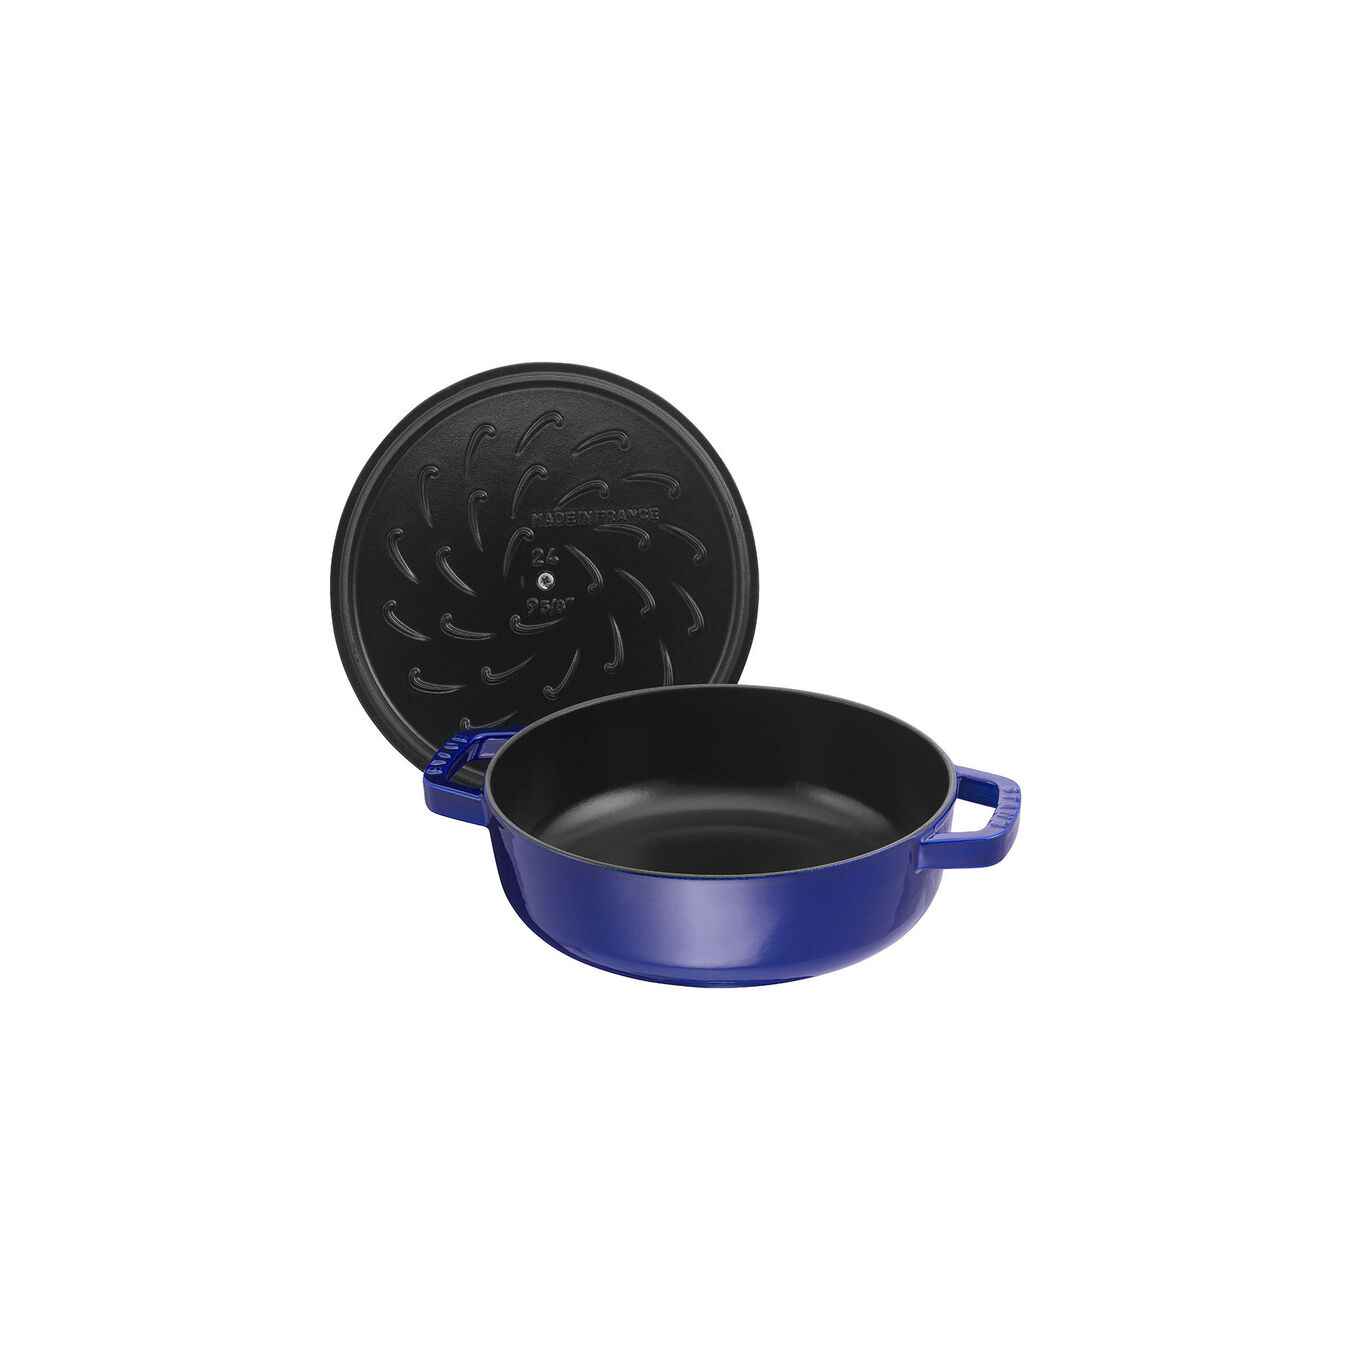 28 cm round Cast iron Saute pan Chistera dark-blue,,large 2